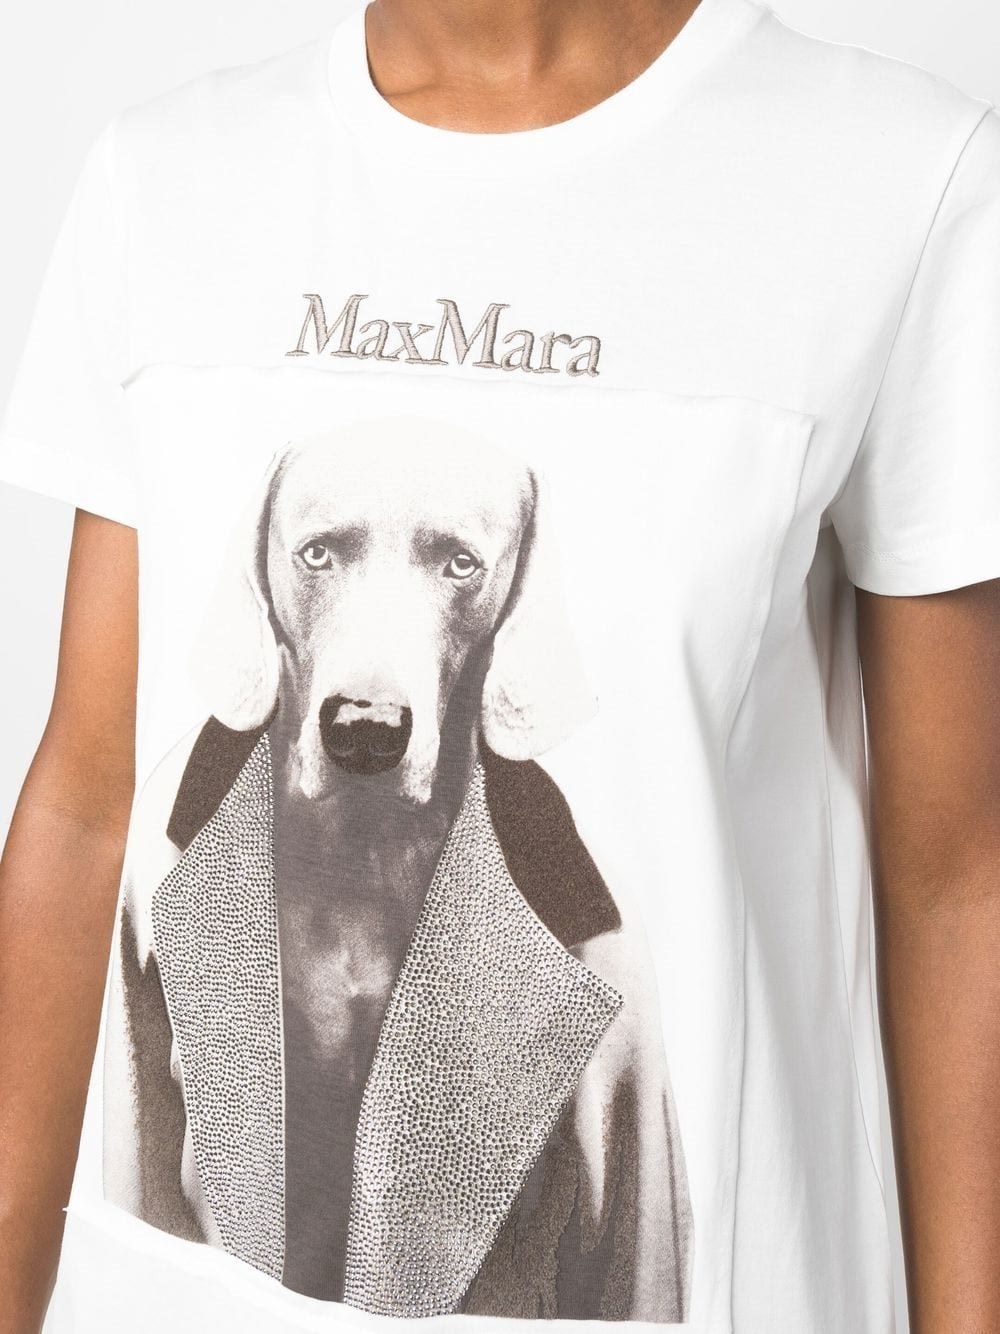 MAX MARA Tシャツ 半袖Tシャツ ドッグ 犬M / マックスマーラ | tspea.org